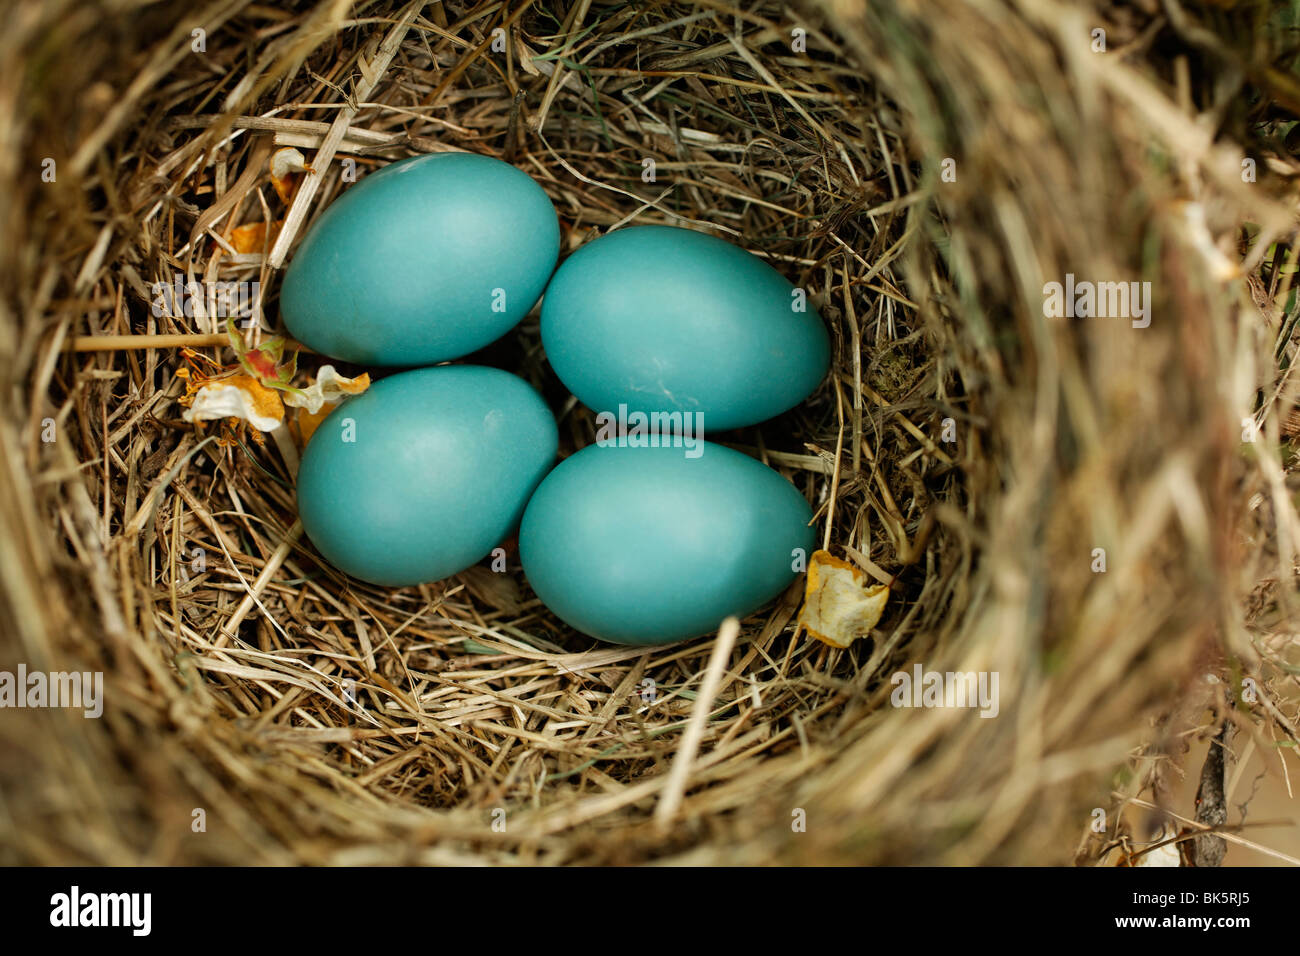 Robins Nest Stockfoto